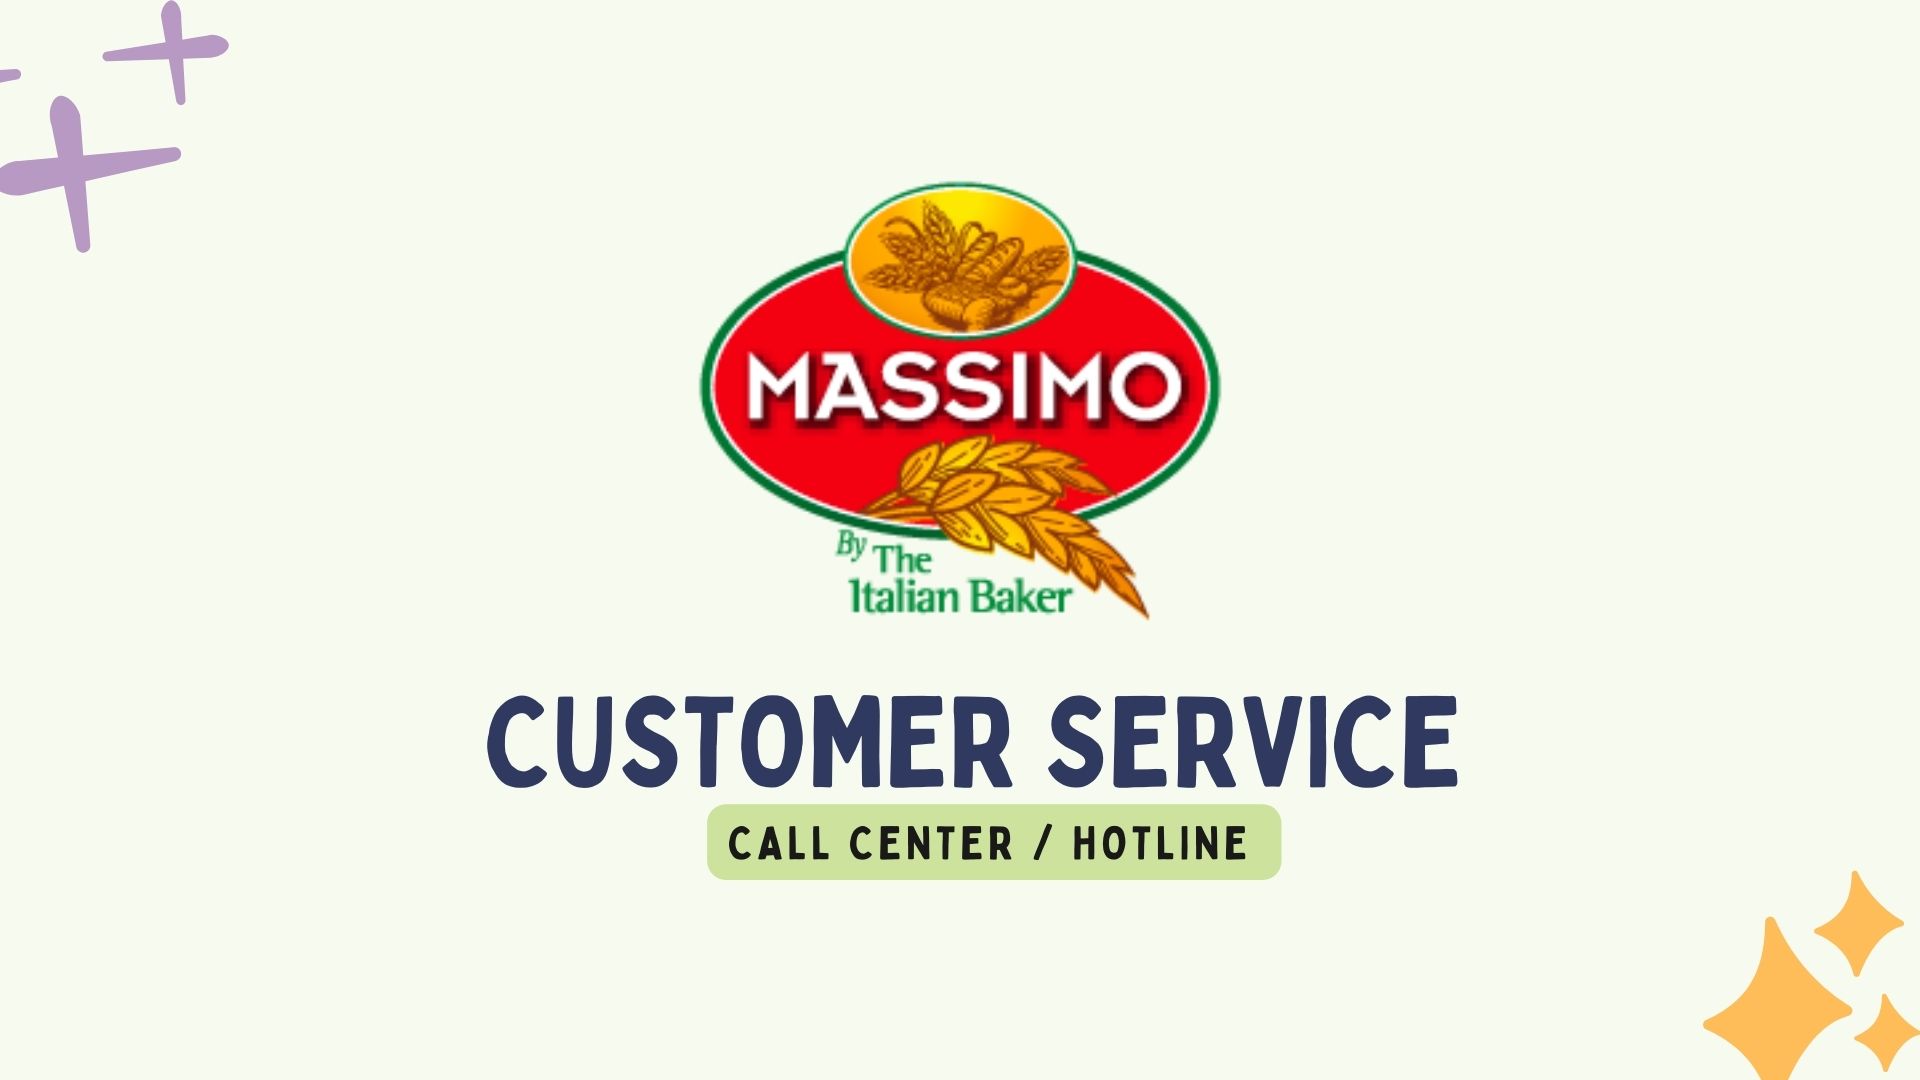 Massimo Customer Service